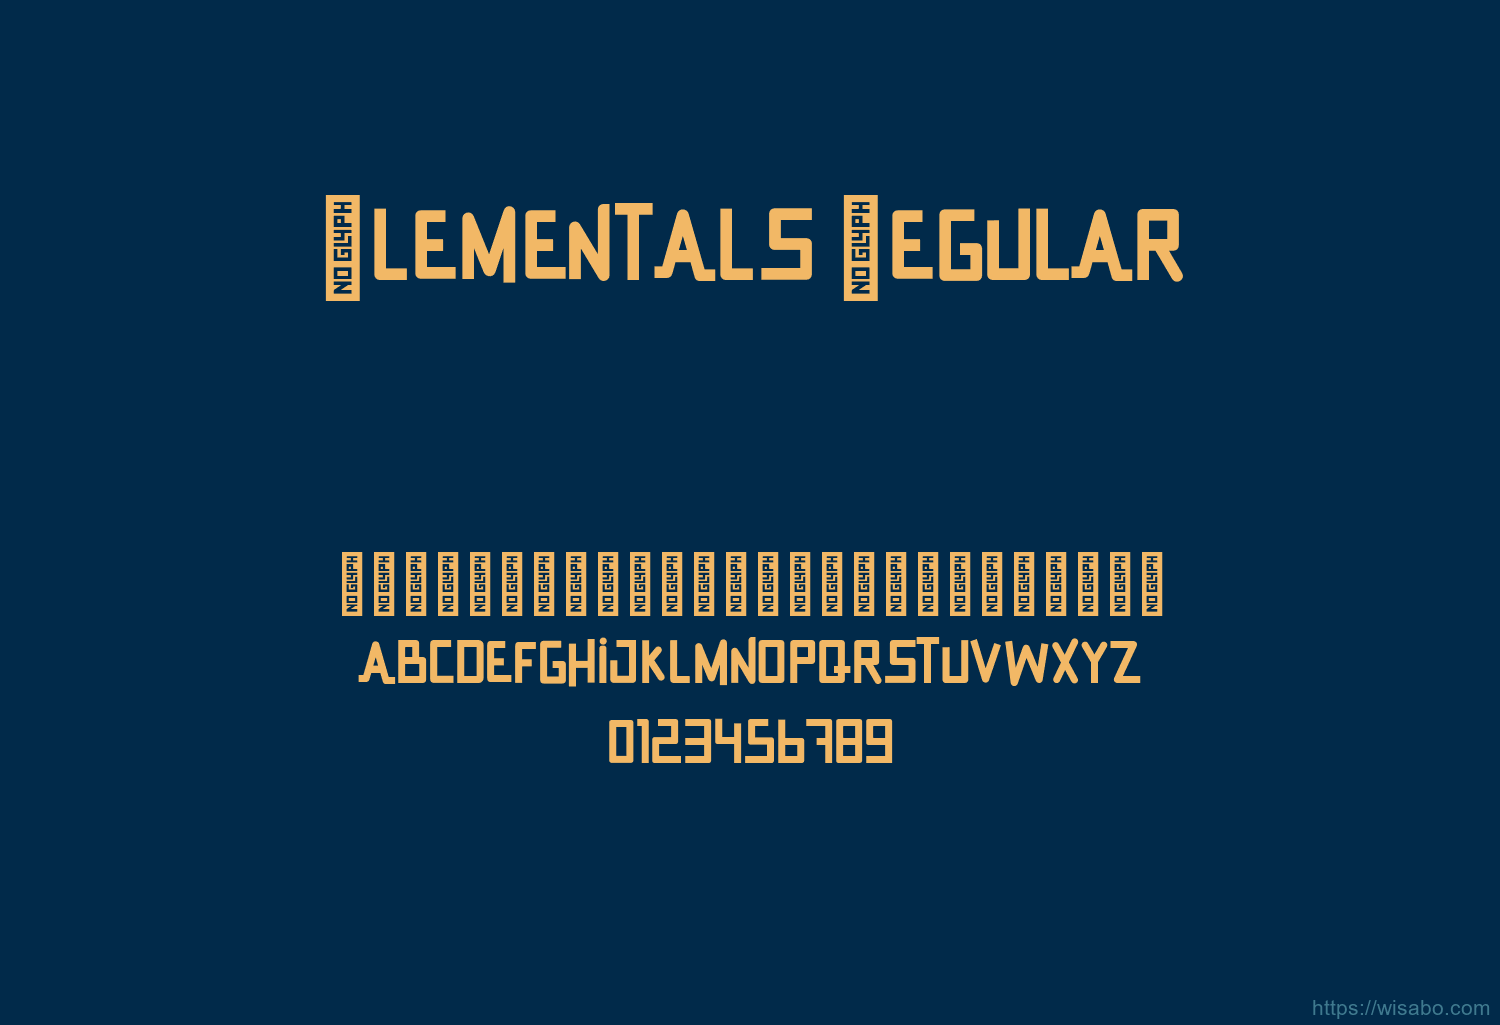 Elementals Regular